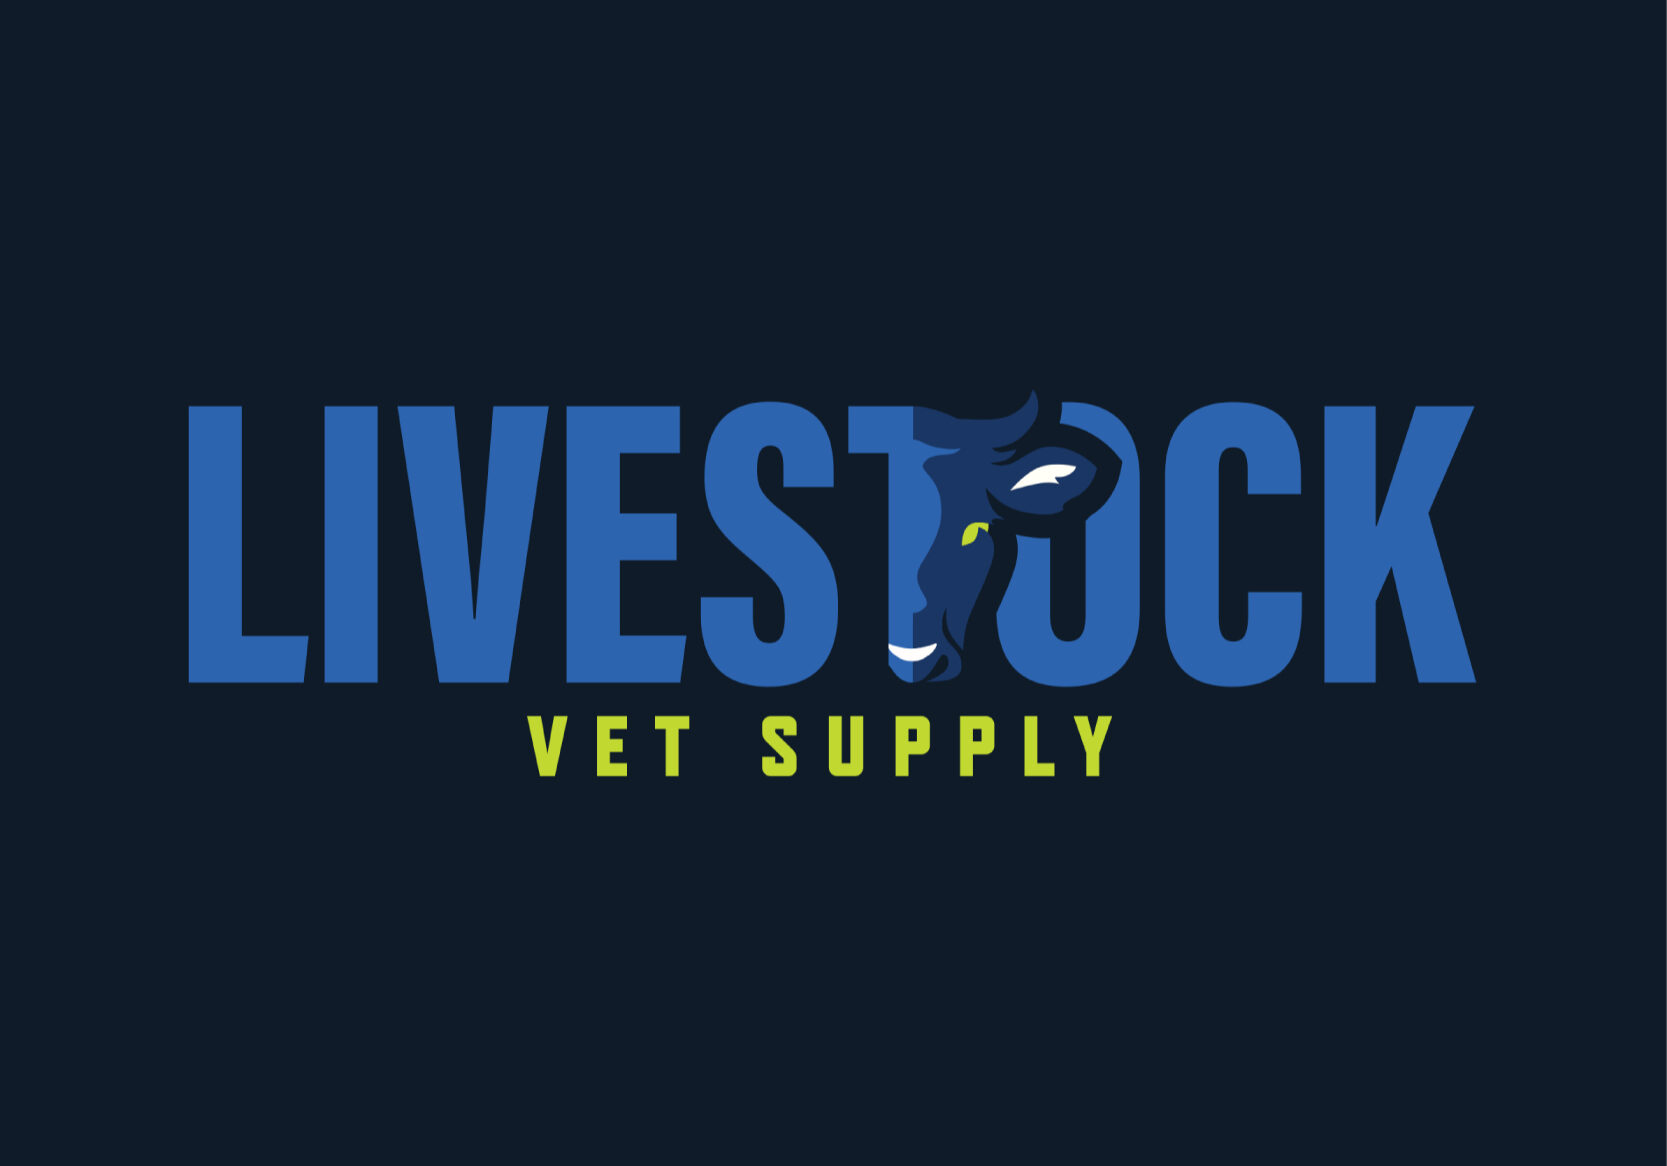 Livestock Vet Supply | SnapMe Creative